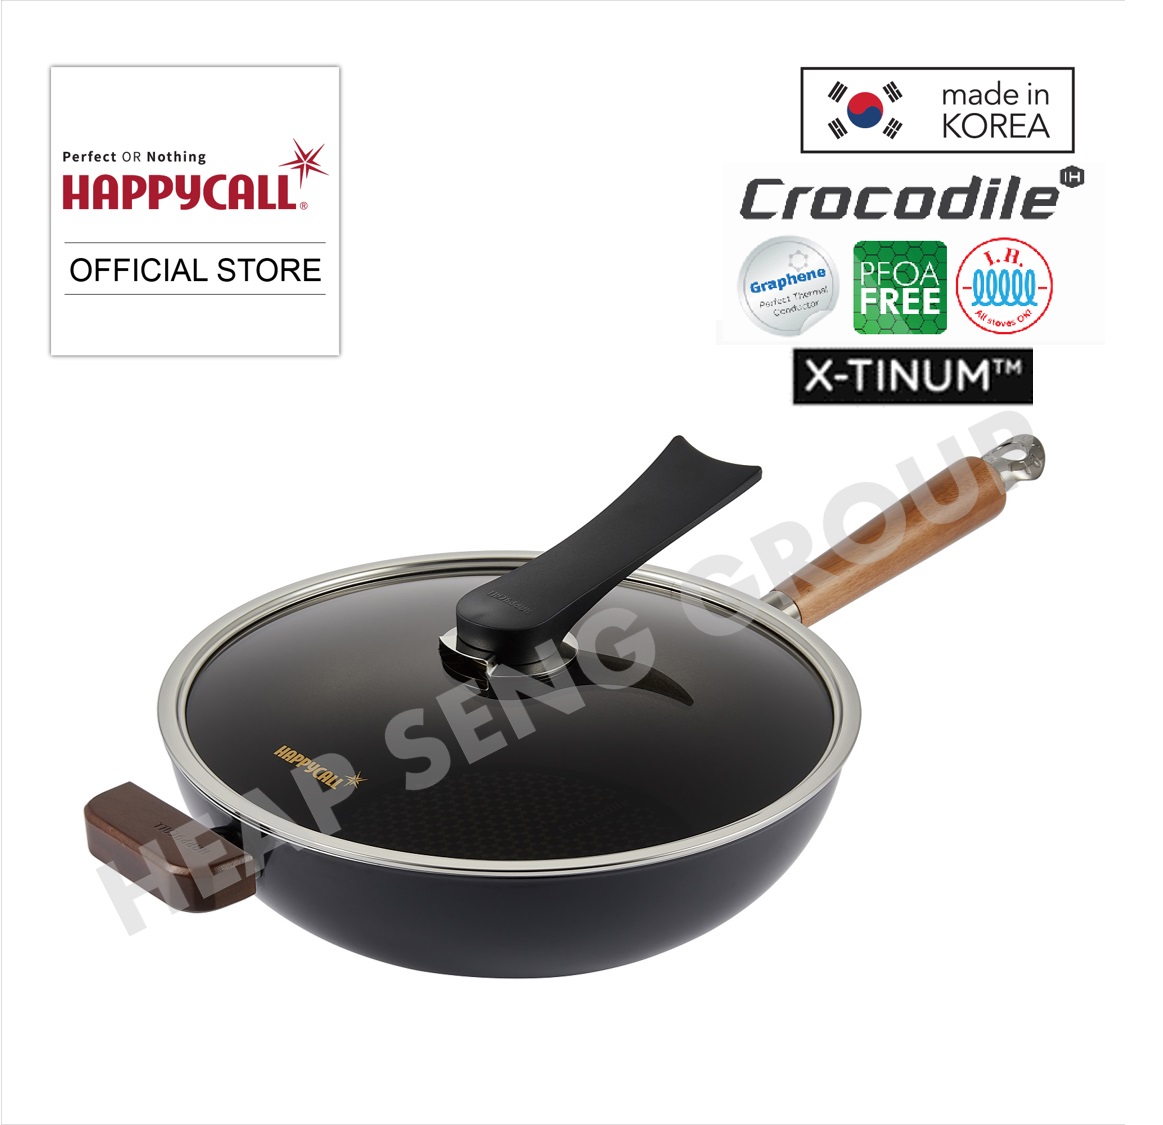 Best Non Stick PAN EVER!!! Happycall *Korea* Crocodile Cookware Set